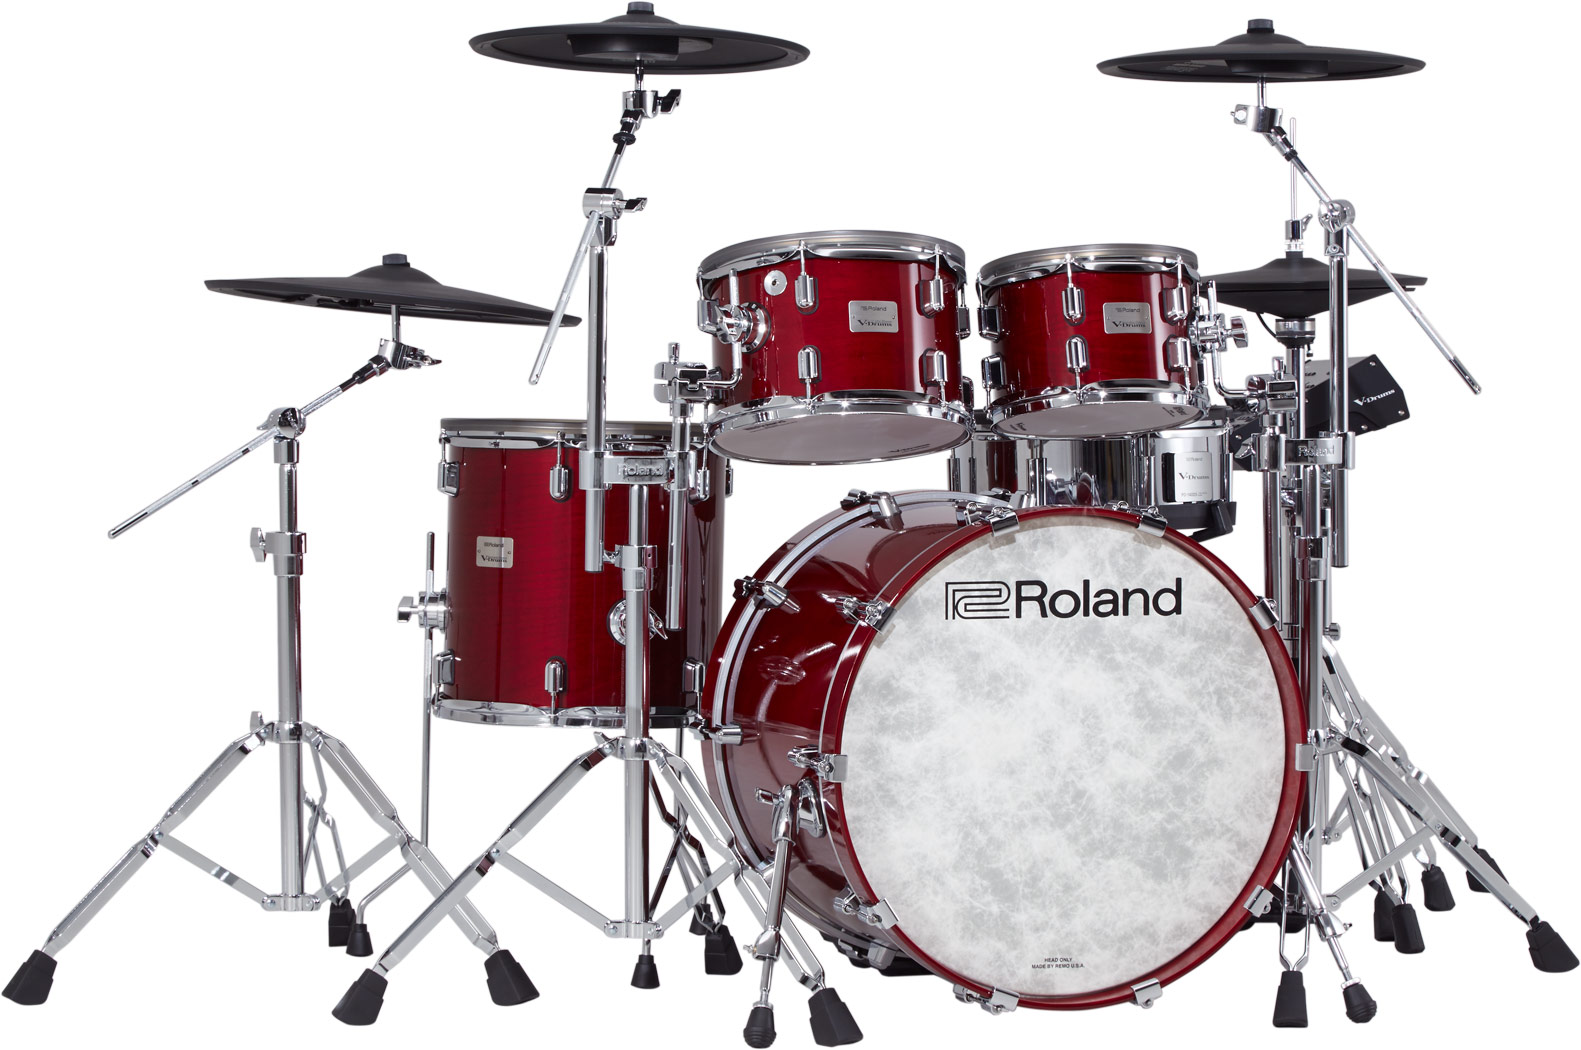 Roland V-Drums Acoustic Design 706 Drum Kit - Gloss Cherry